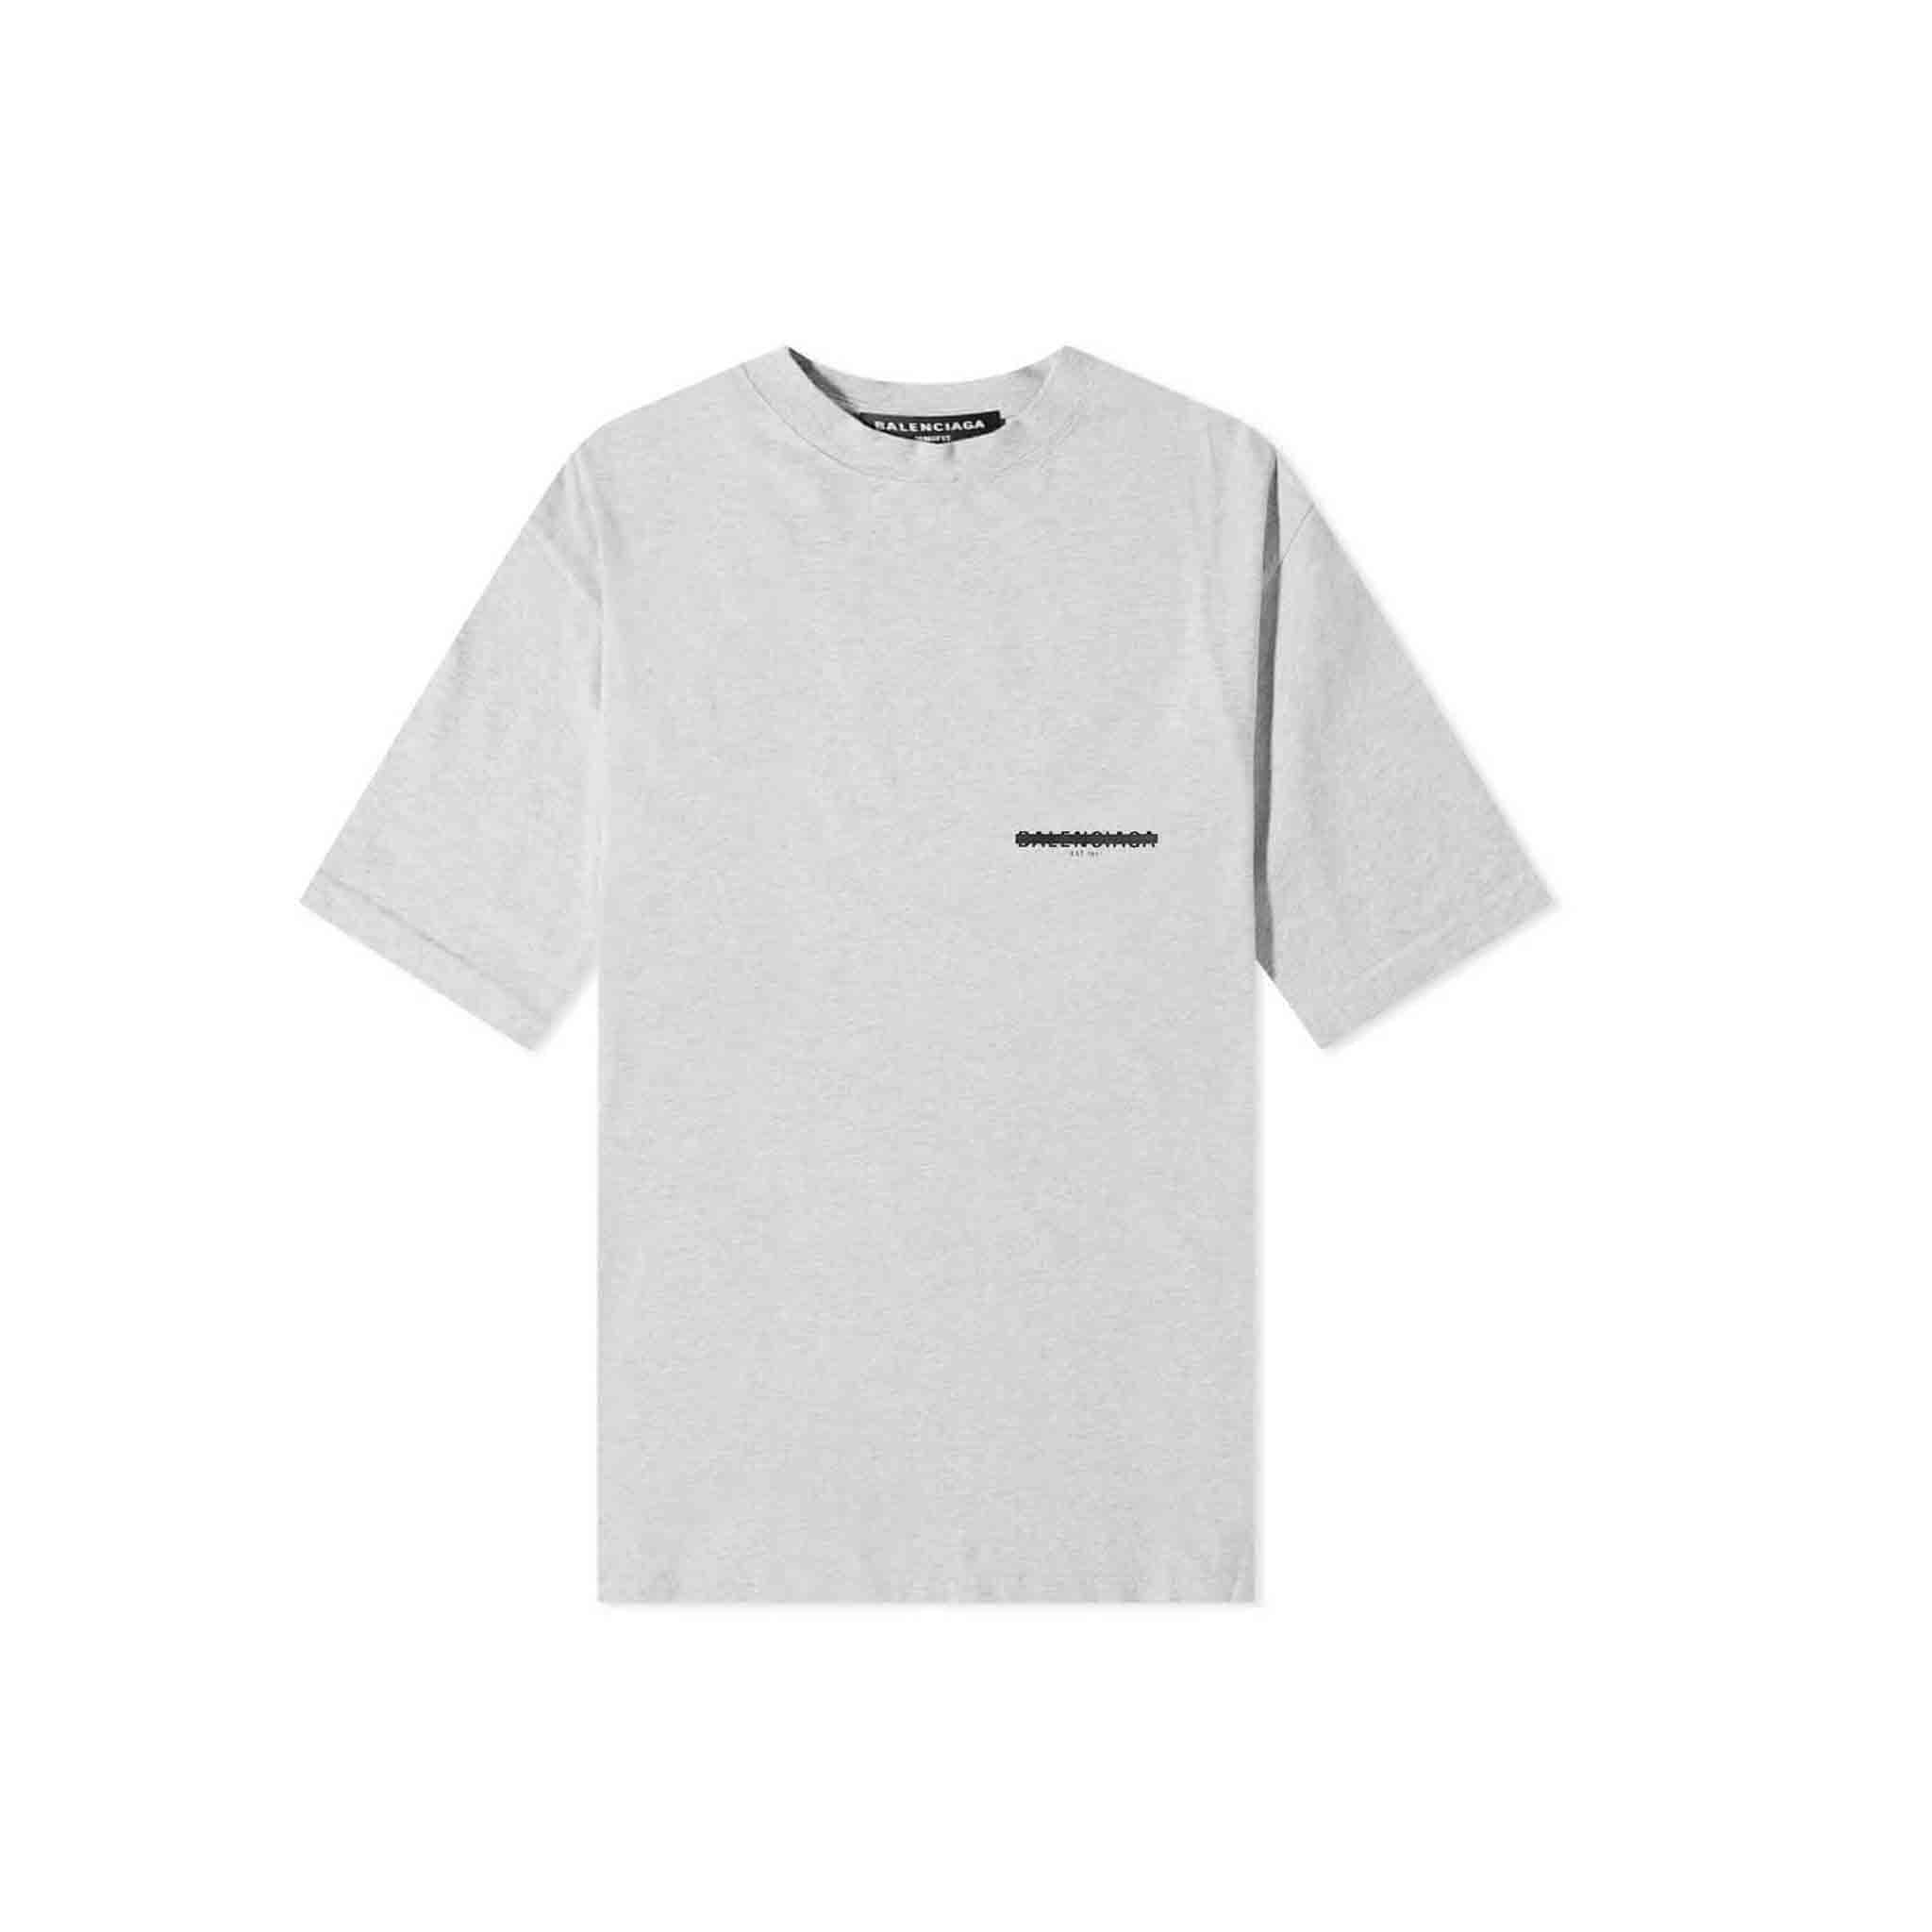 Tshirt Balenciaga White size S International in Cotton  29839397